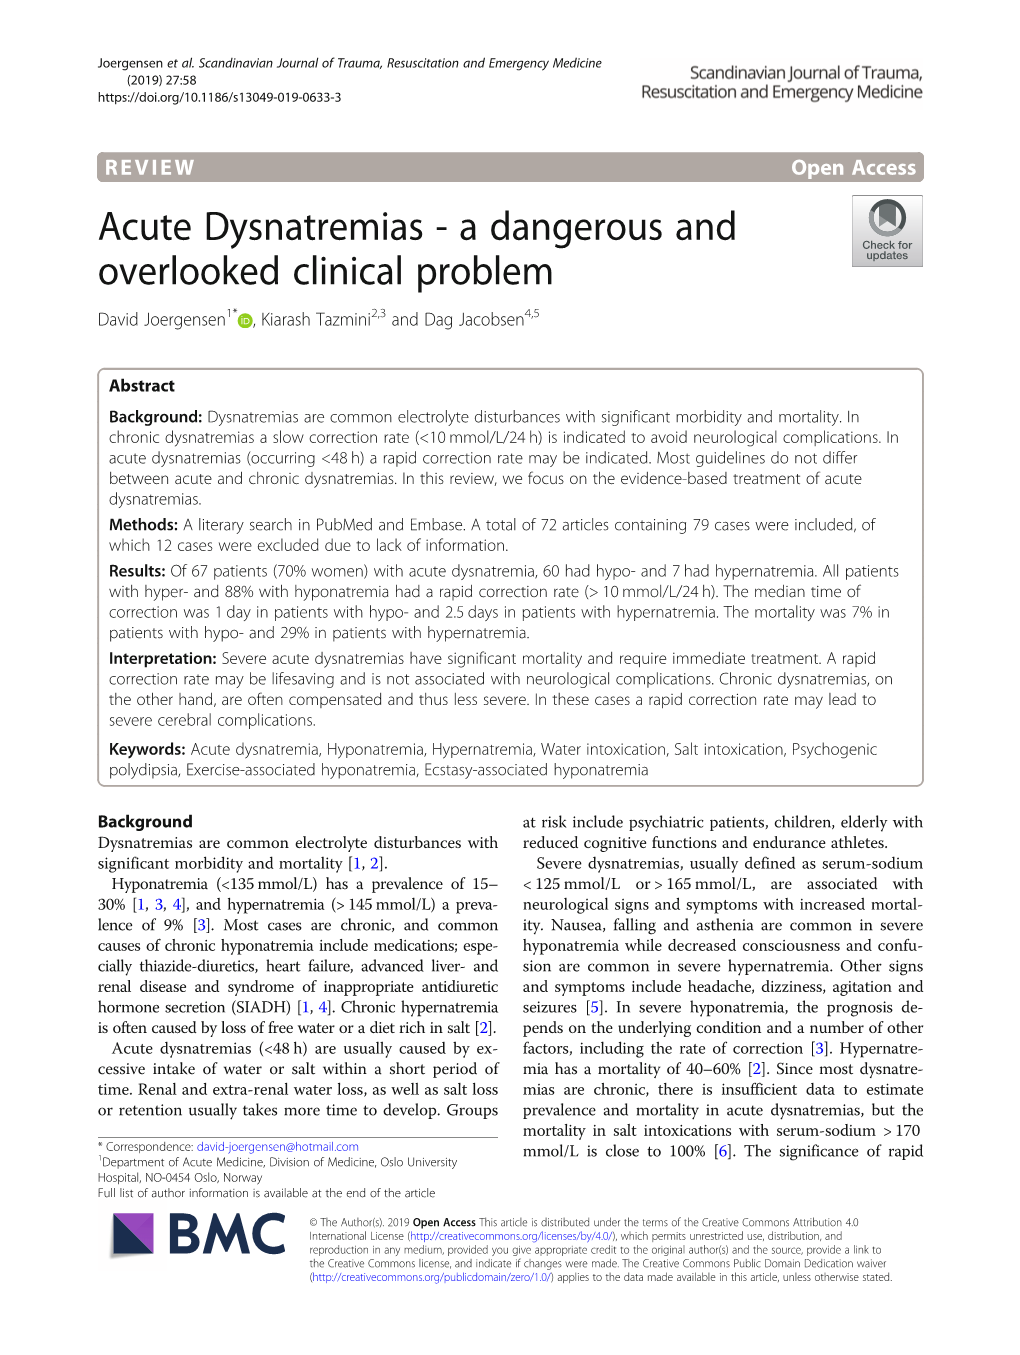 Acute Dysnatremias - a Dangerous and Overlooked Clinical Problem David Joergensen1* , Kiarash Tazmini2,3 and Dag Jacobsen4,5